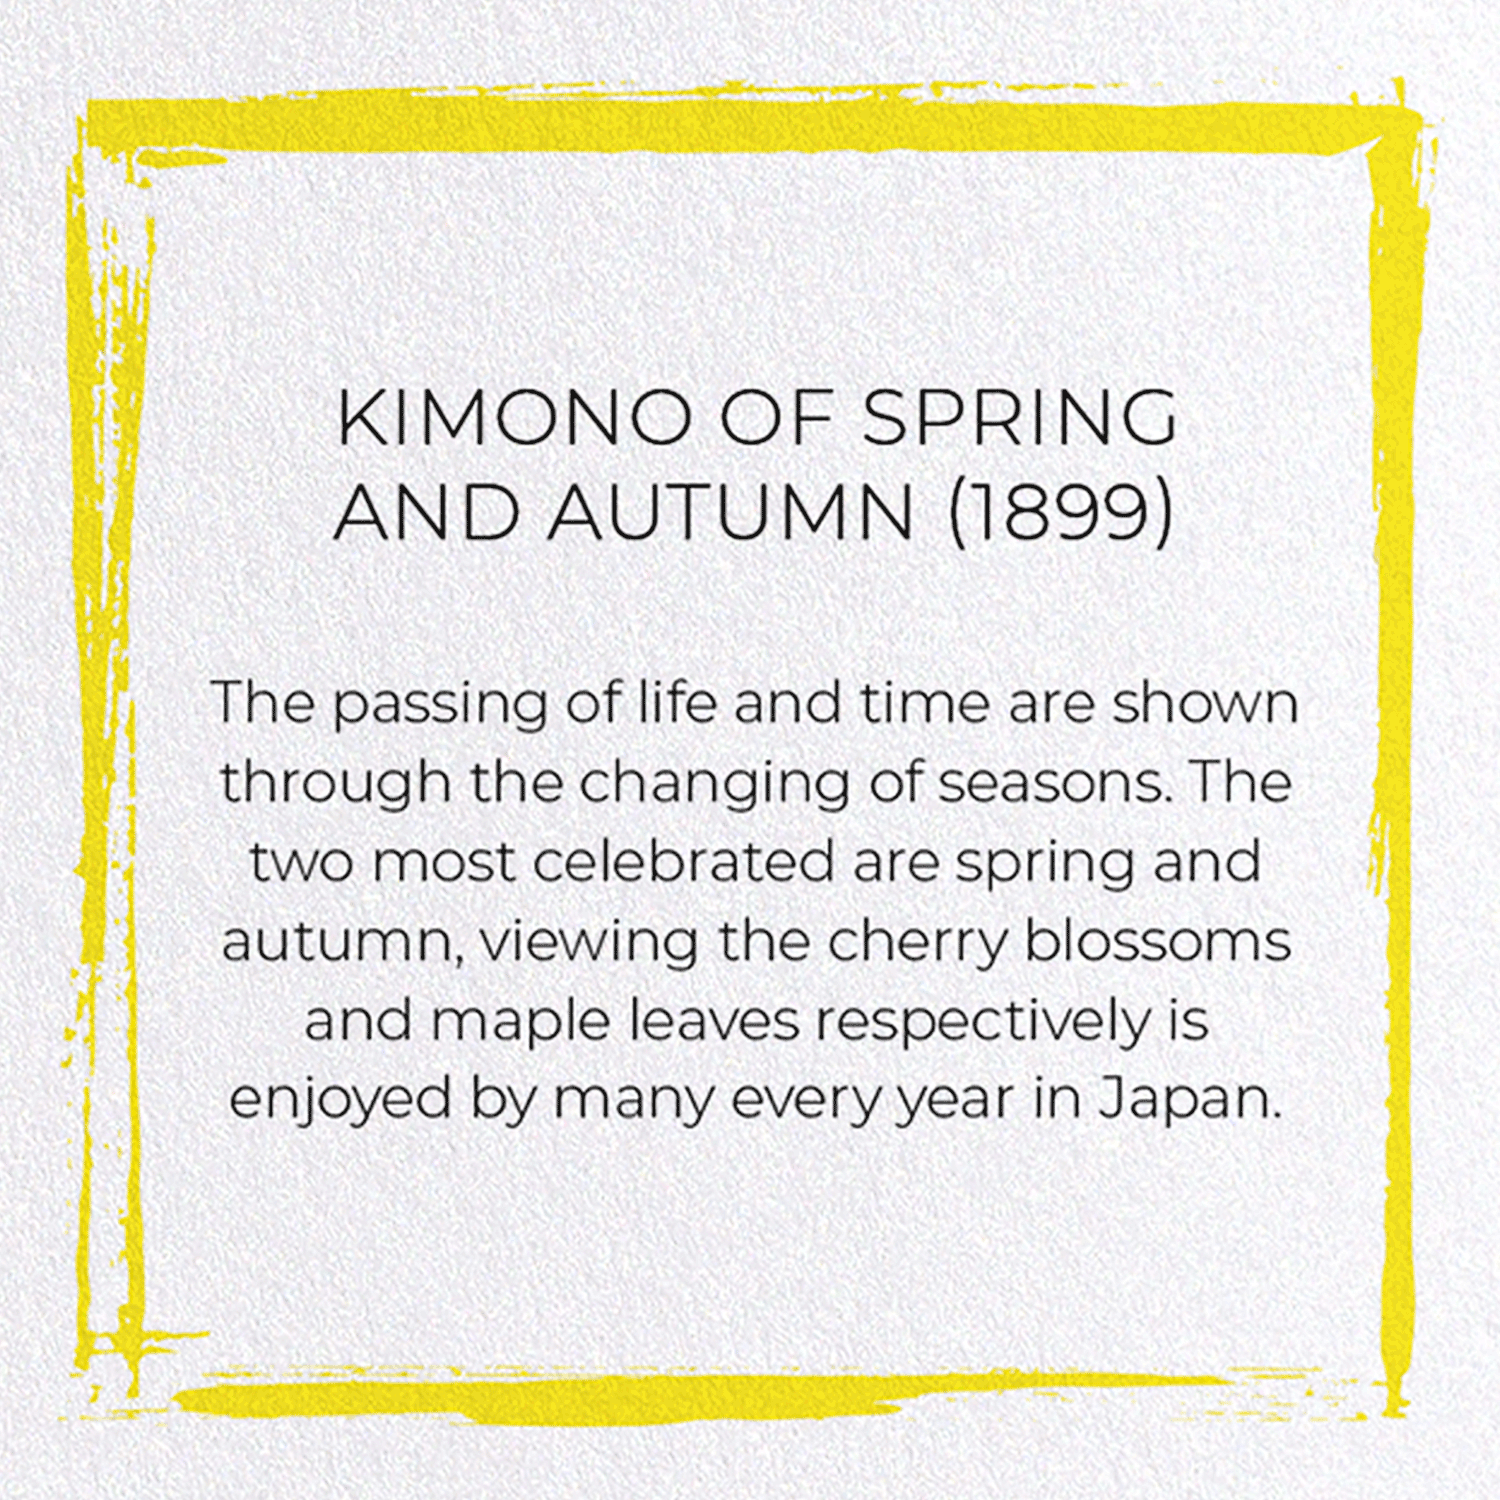 KIMONO OF SPRING AND AUTUMN (1899): Japanese Greeting Card